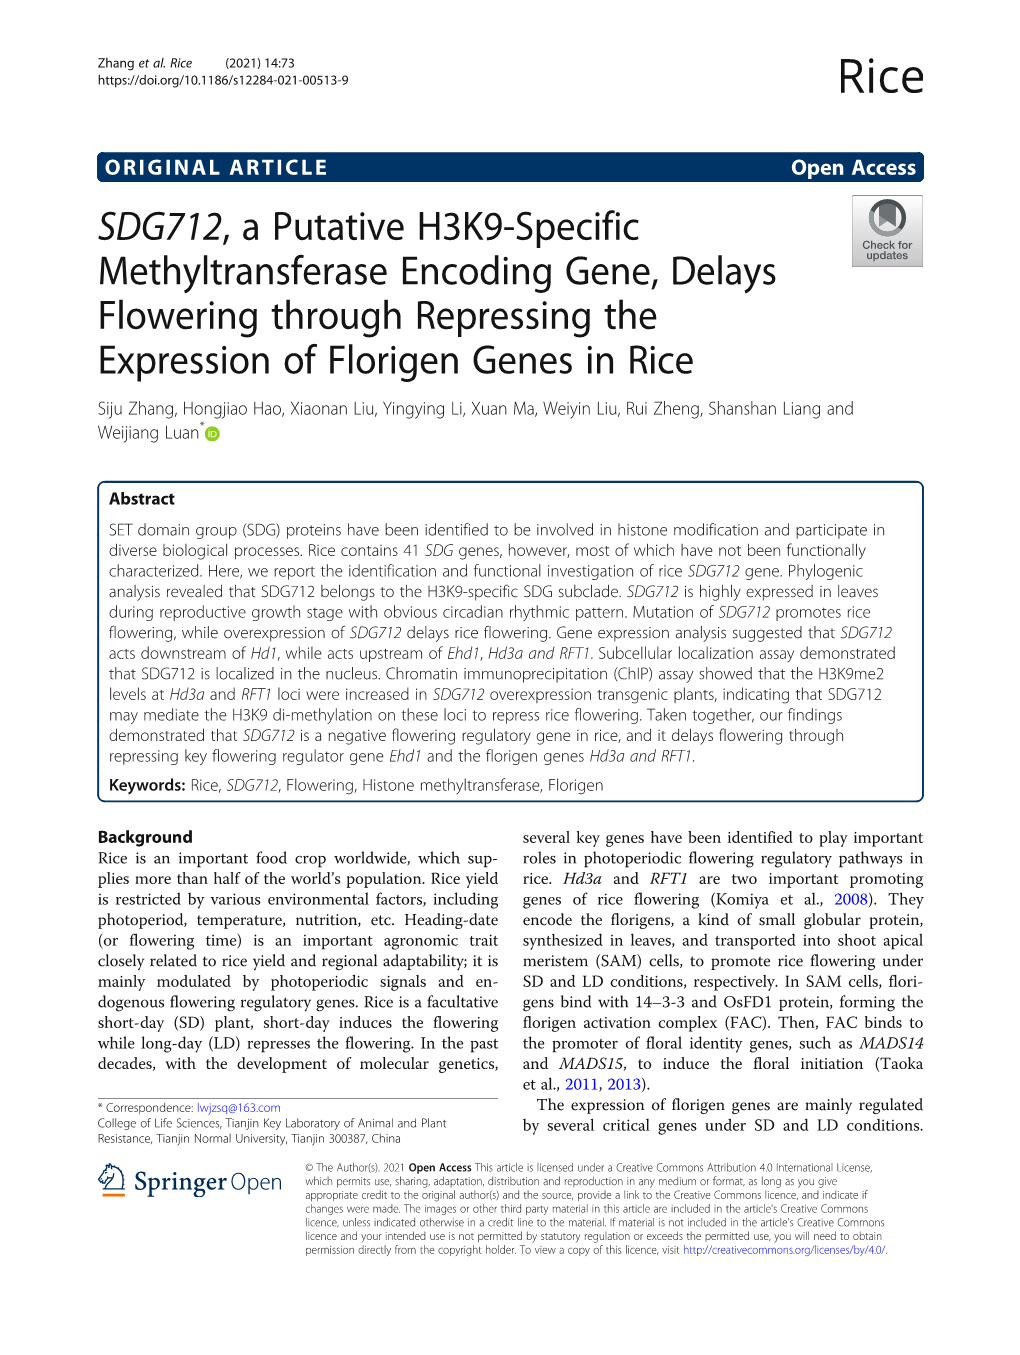 SDG712, a Putative H3K9-Specific Methyltransferase Encoding Gene